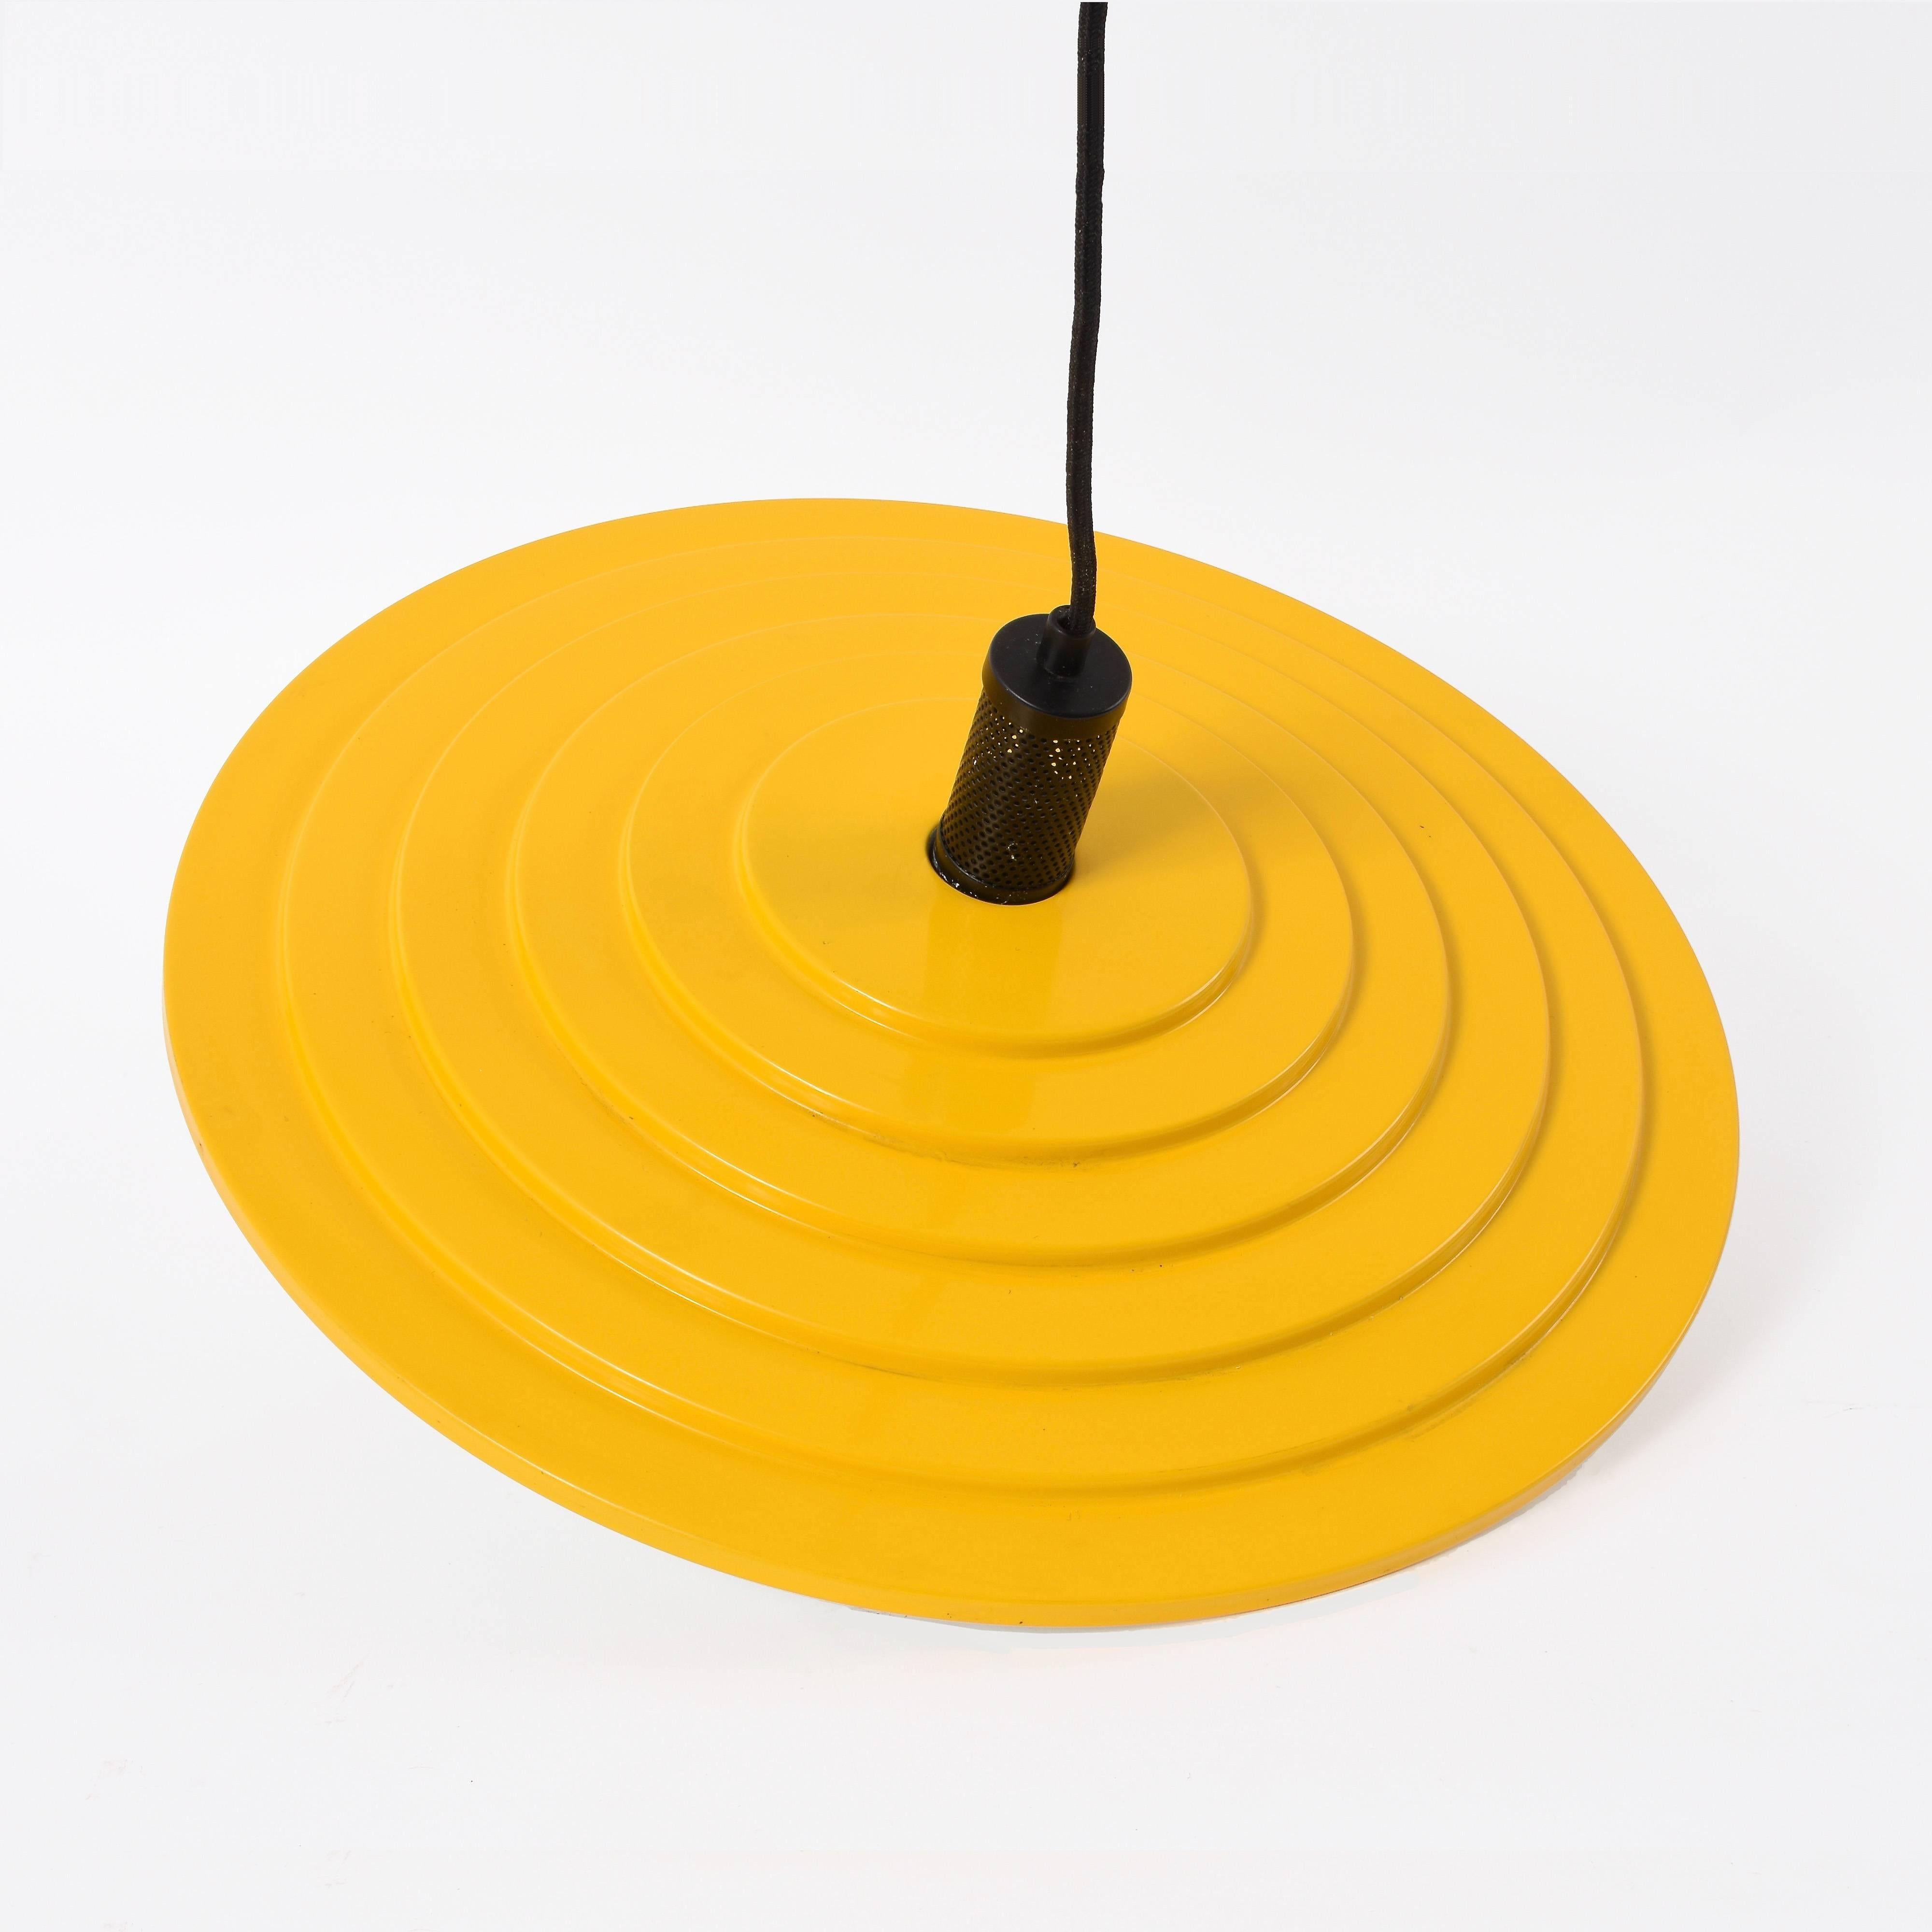 20th Century Yellow Disc Chandelier, Enamelled Metal, Modern 1970s Italian Pendant, Lighting